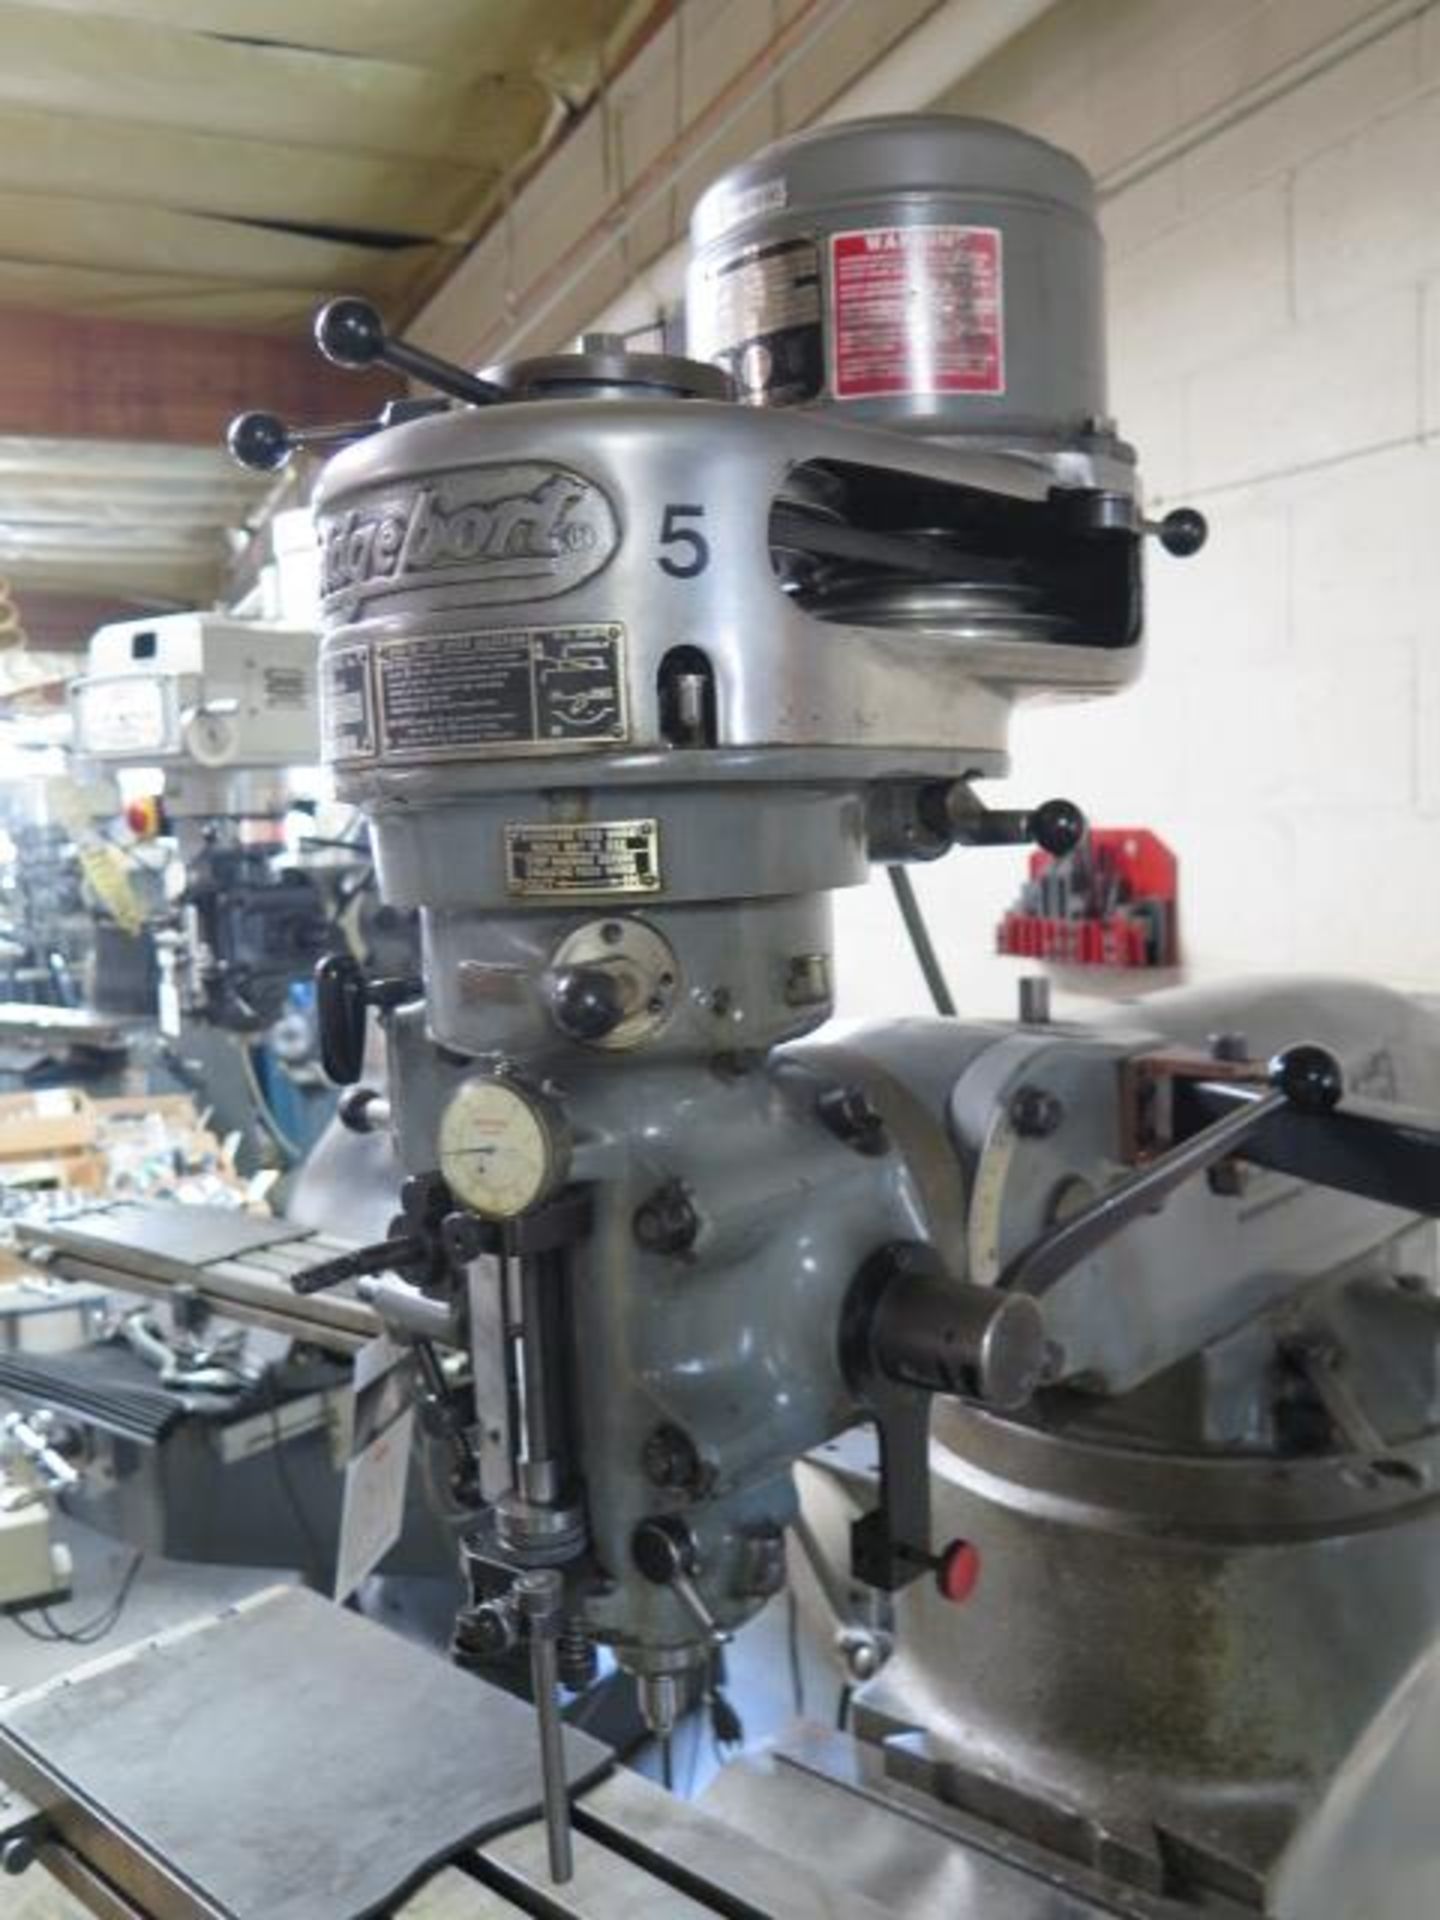 Bridgeport Vertical Mill s/n 160230 w/ Acu-Rite Programmable DRO, 1Hp Motor, 80-2720 RPM, SOLD AS IS - Image 5 of 13